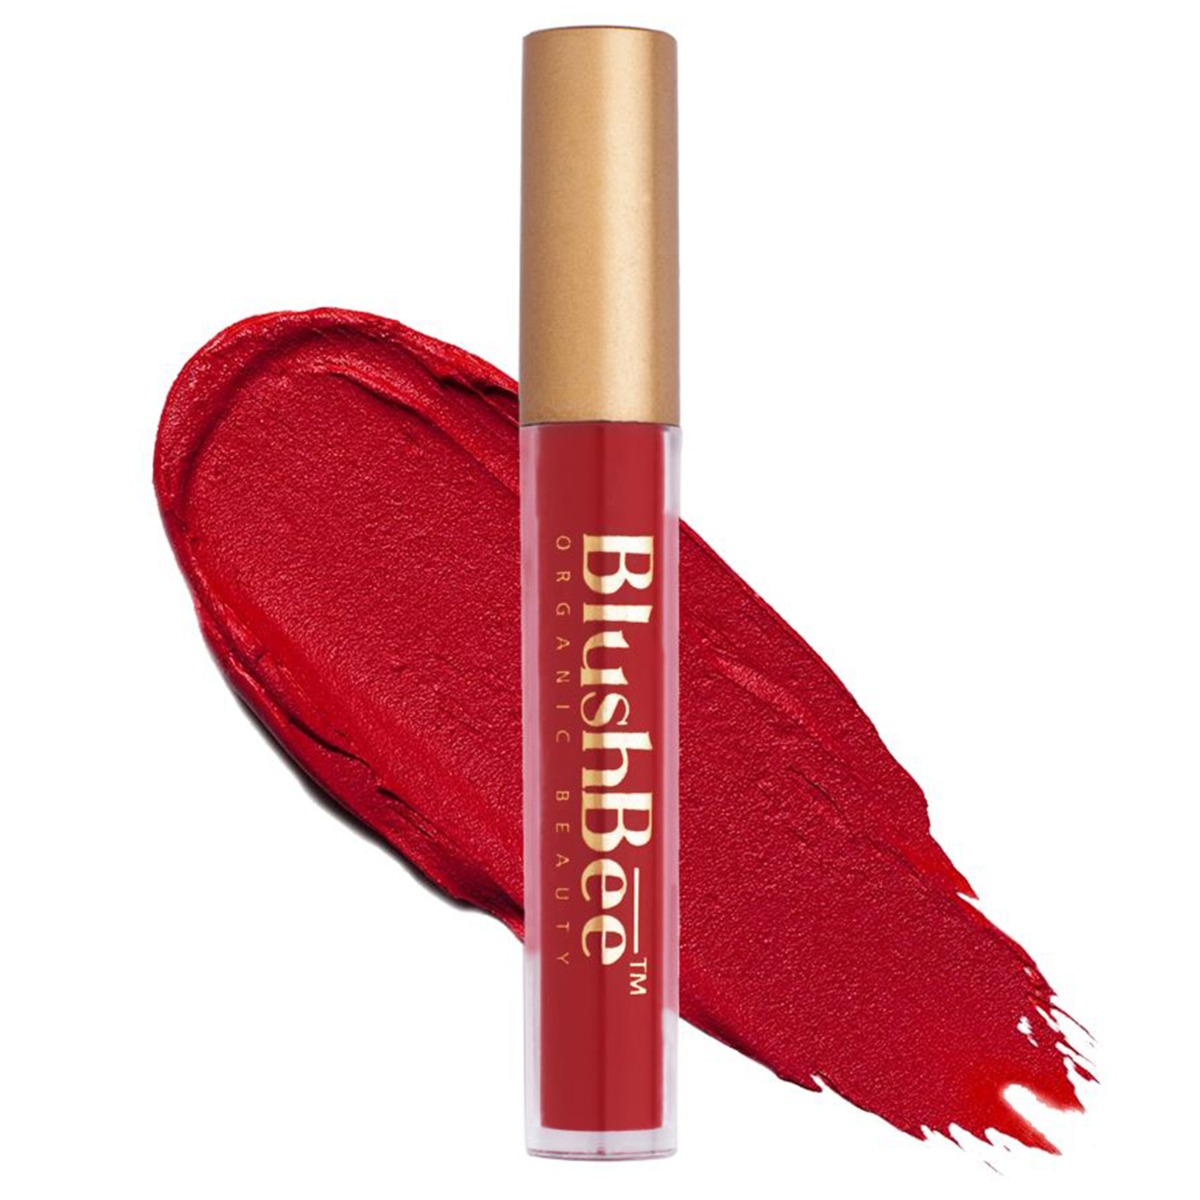 BlushBee Organic Beauty Lip Nourishing Vegan Long Lasting Liquid Lipstick - Lit Me, Reddish Maroon, 5ml